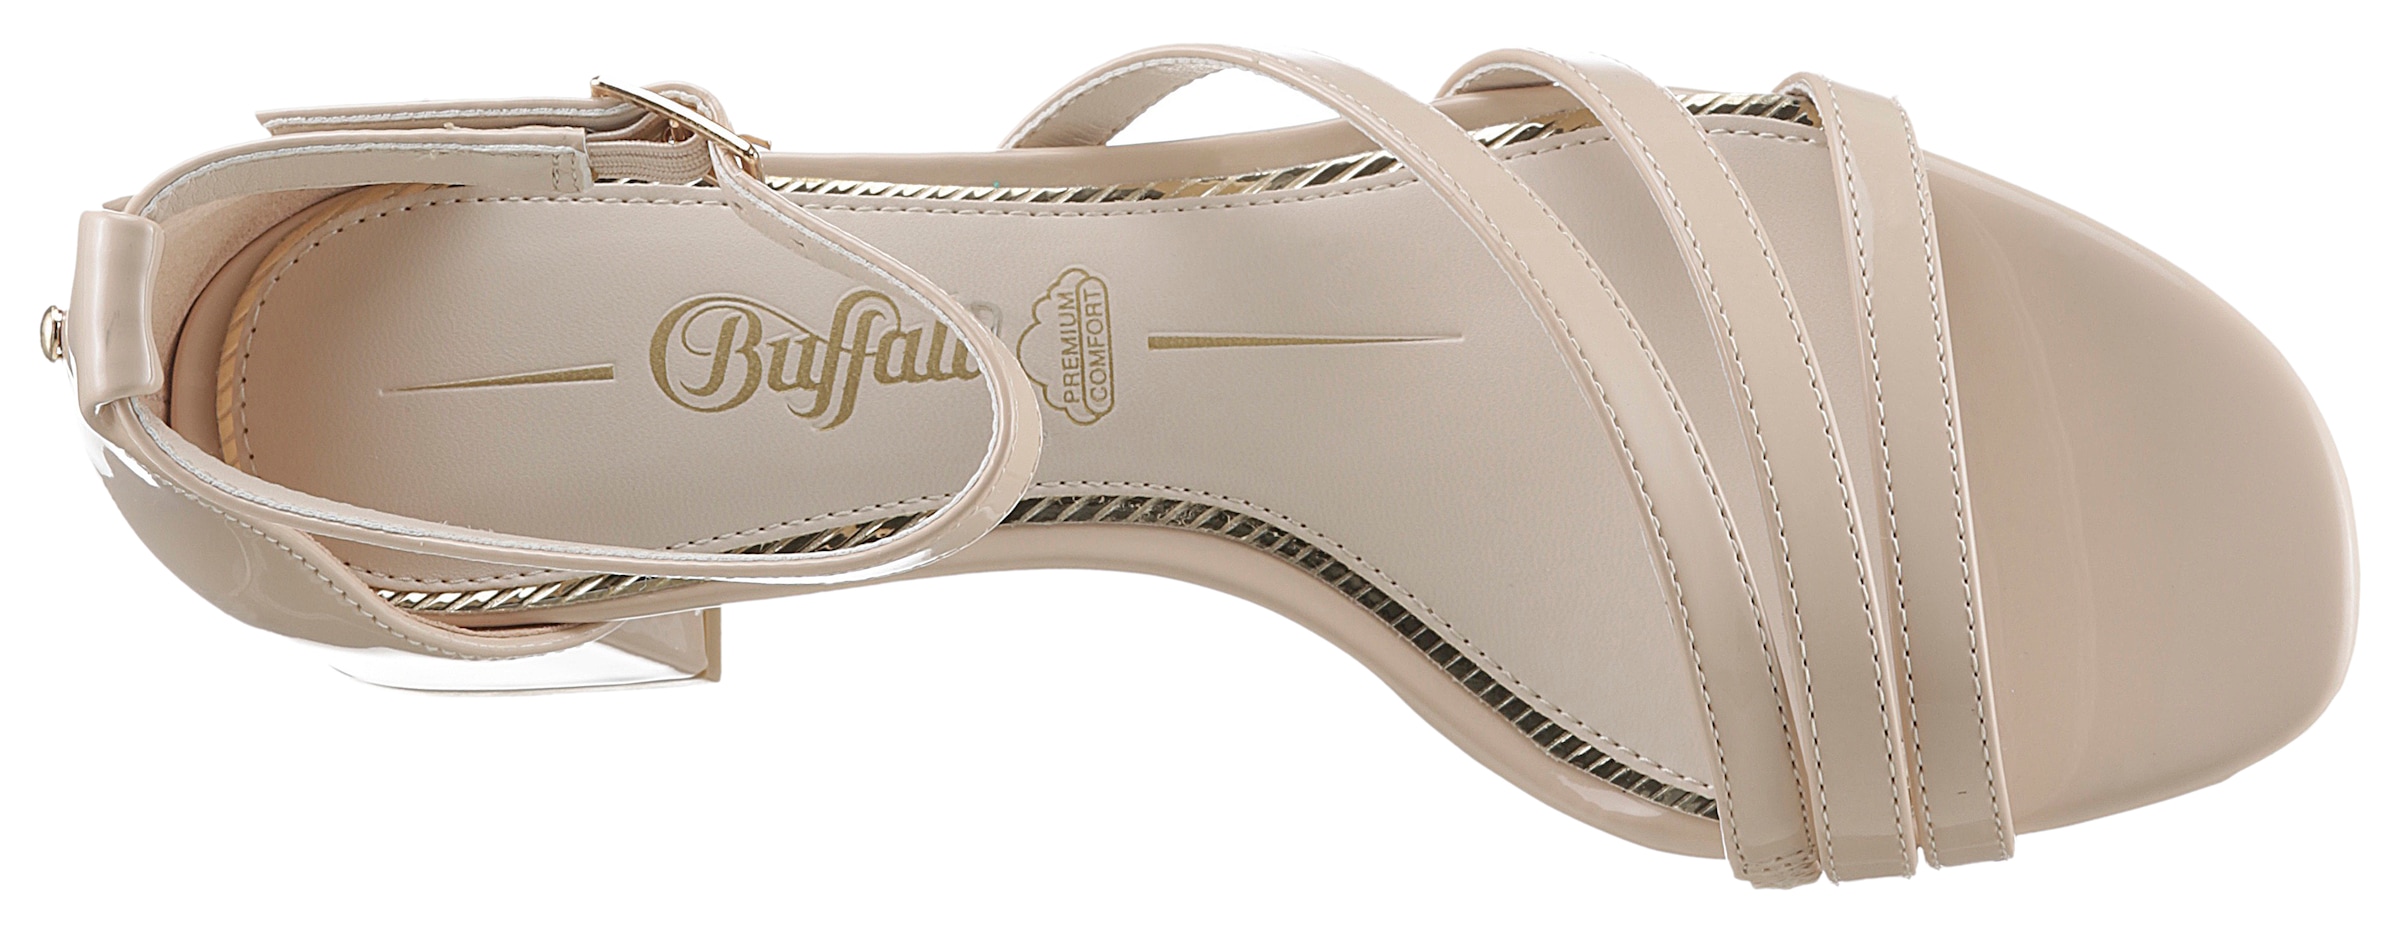 Buffalo Sandalette »LILLY GRACE«, mit verstellbarem Riemchen